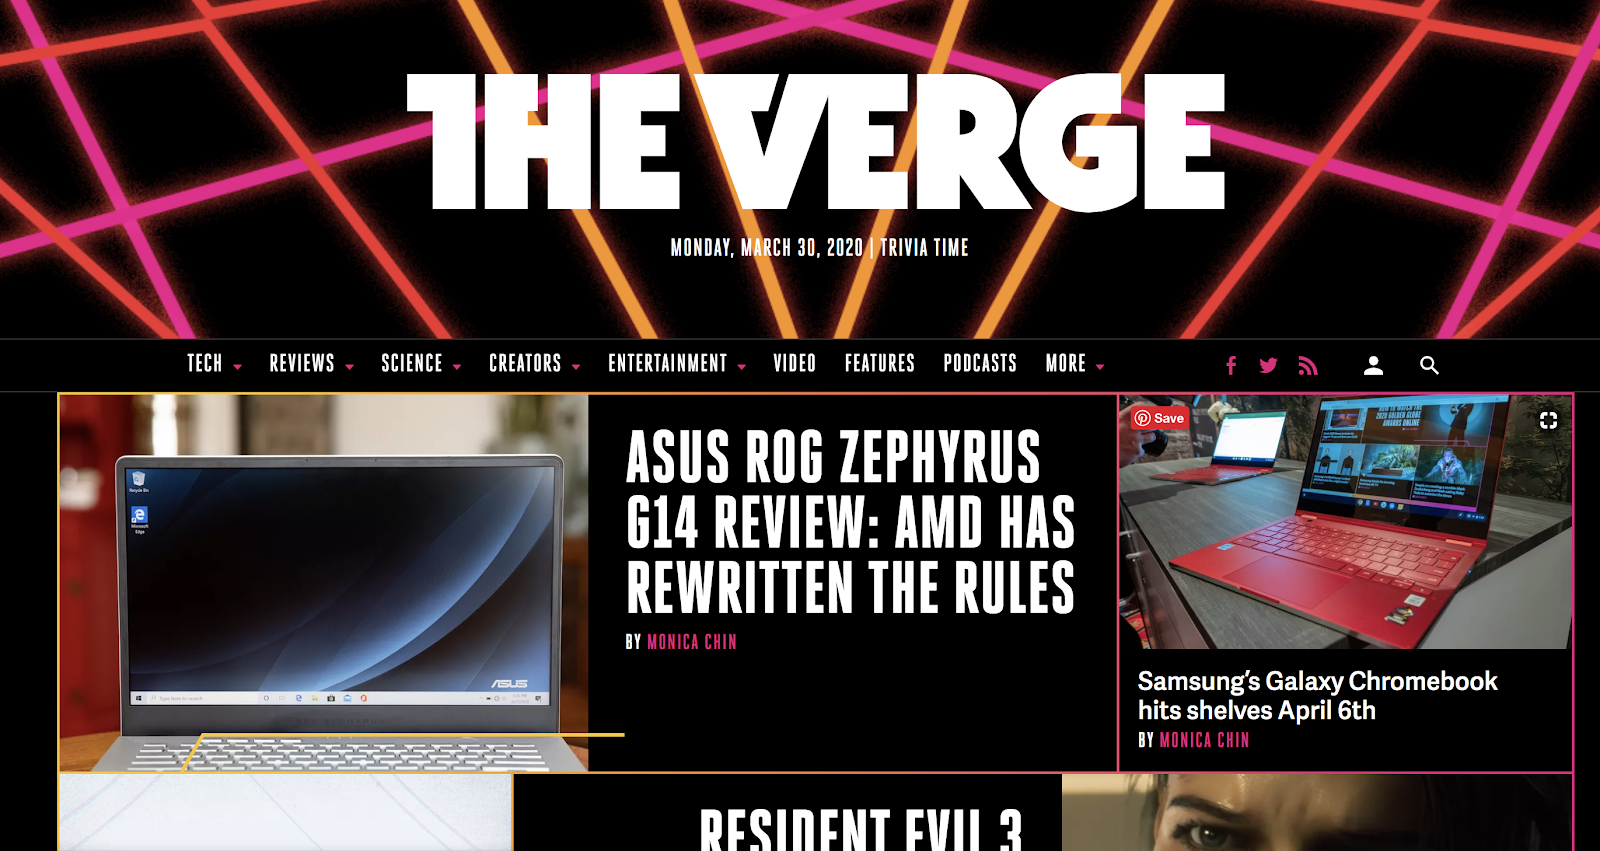 The Verge Homepage Screenshot (Blog Layout Examples)